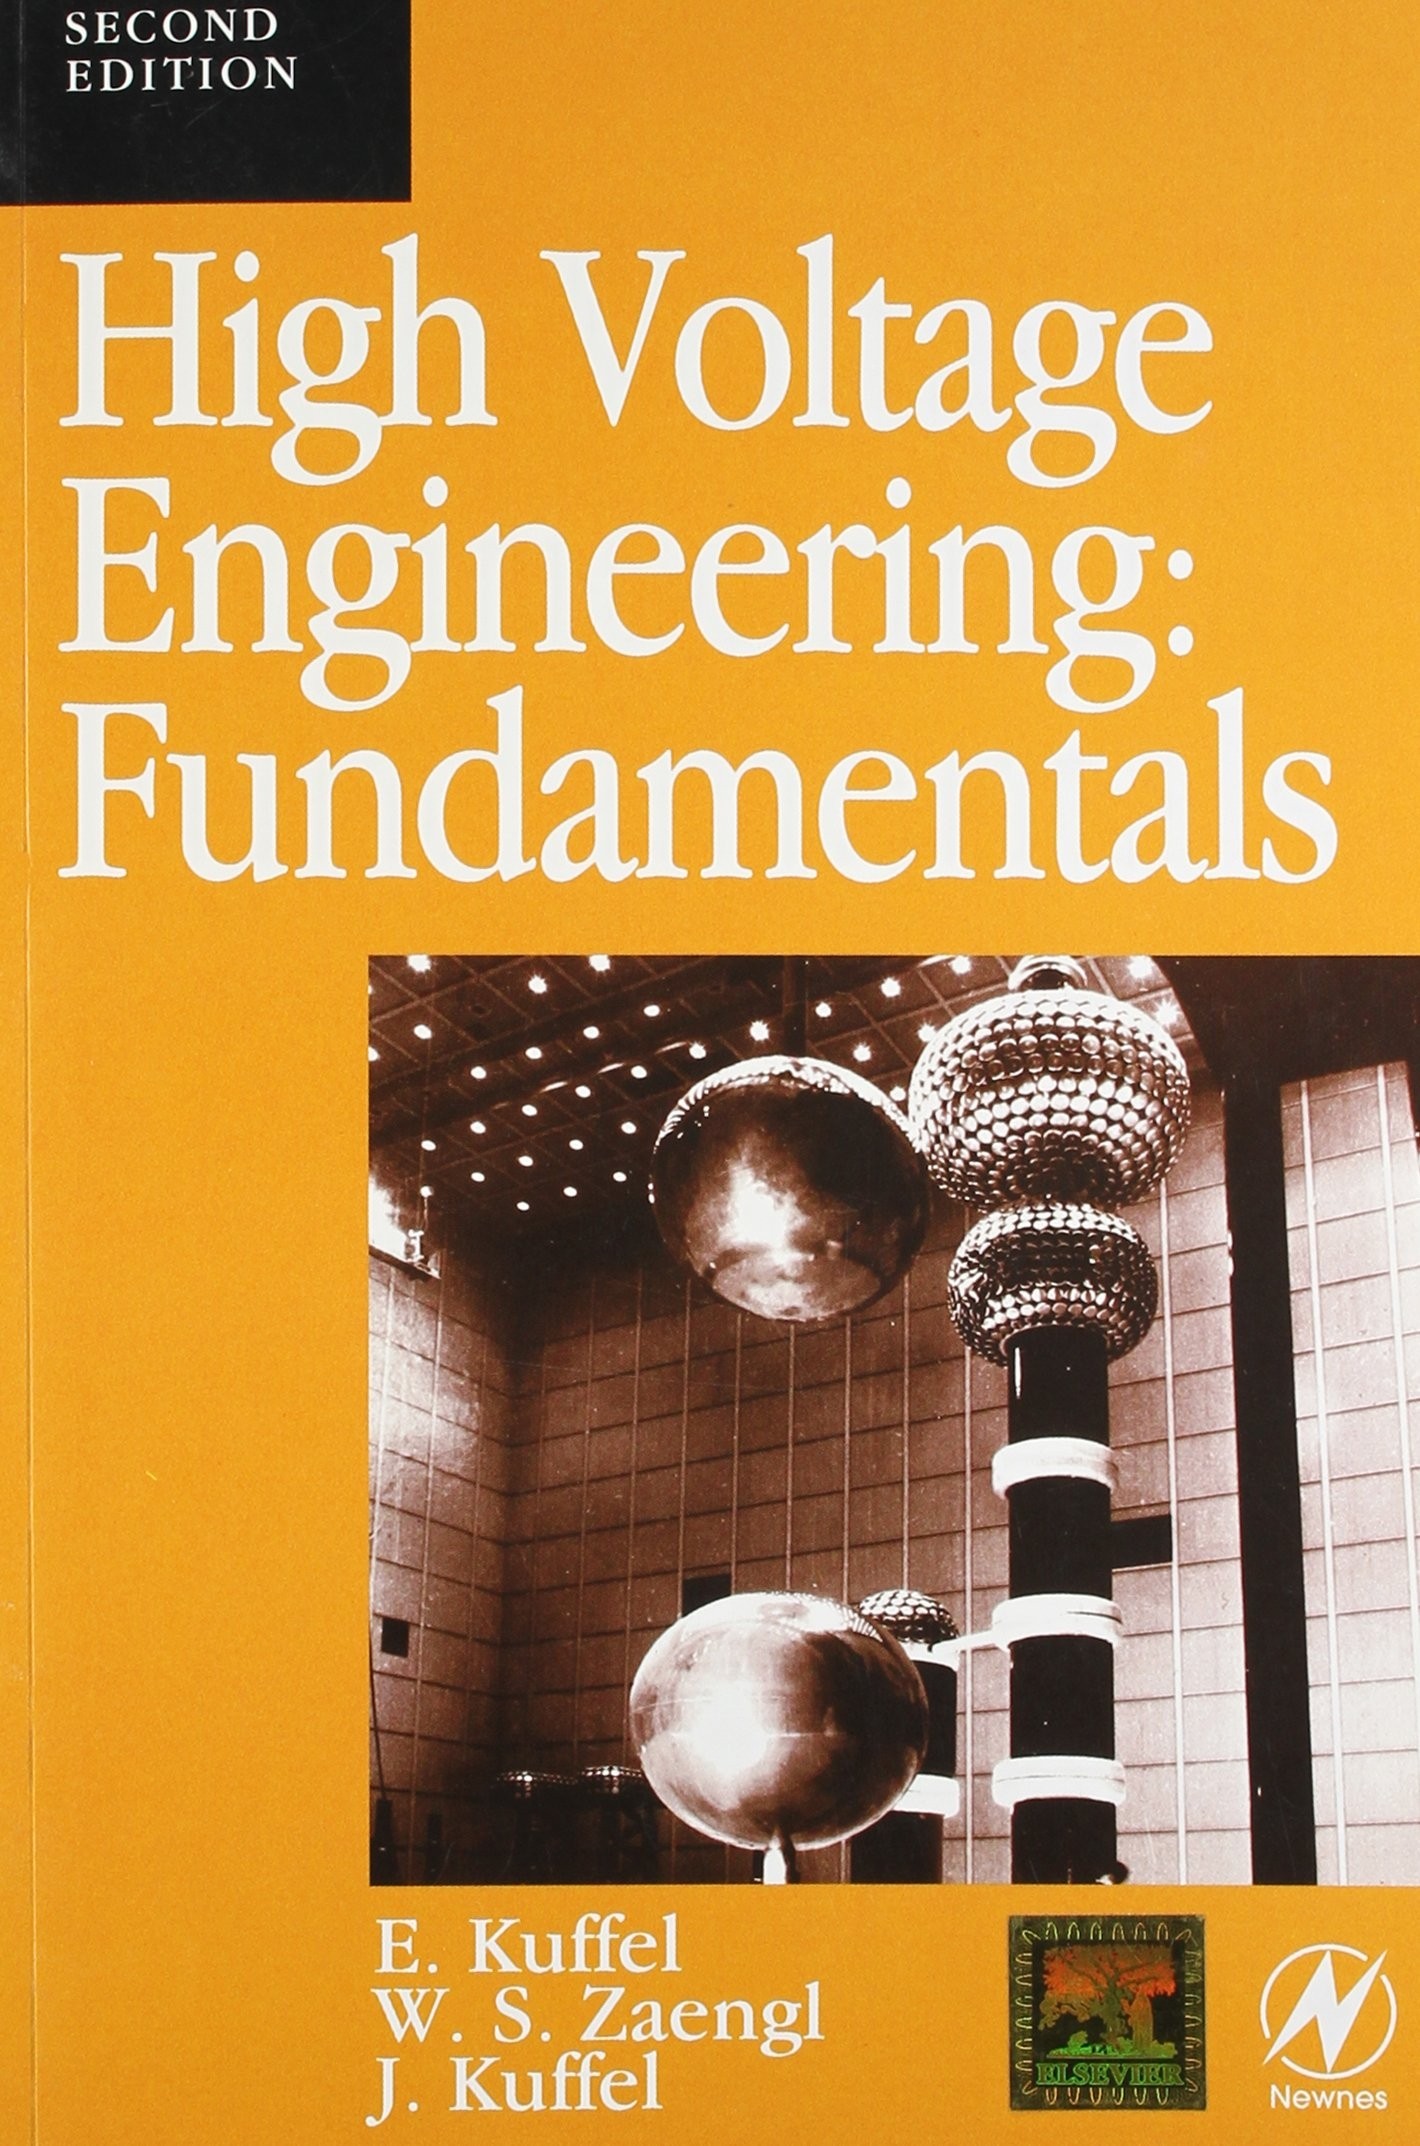 High Voltage Engineering: Fundamentals, 2e